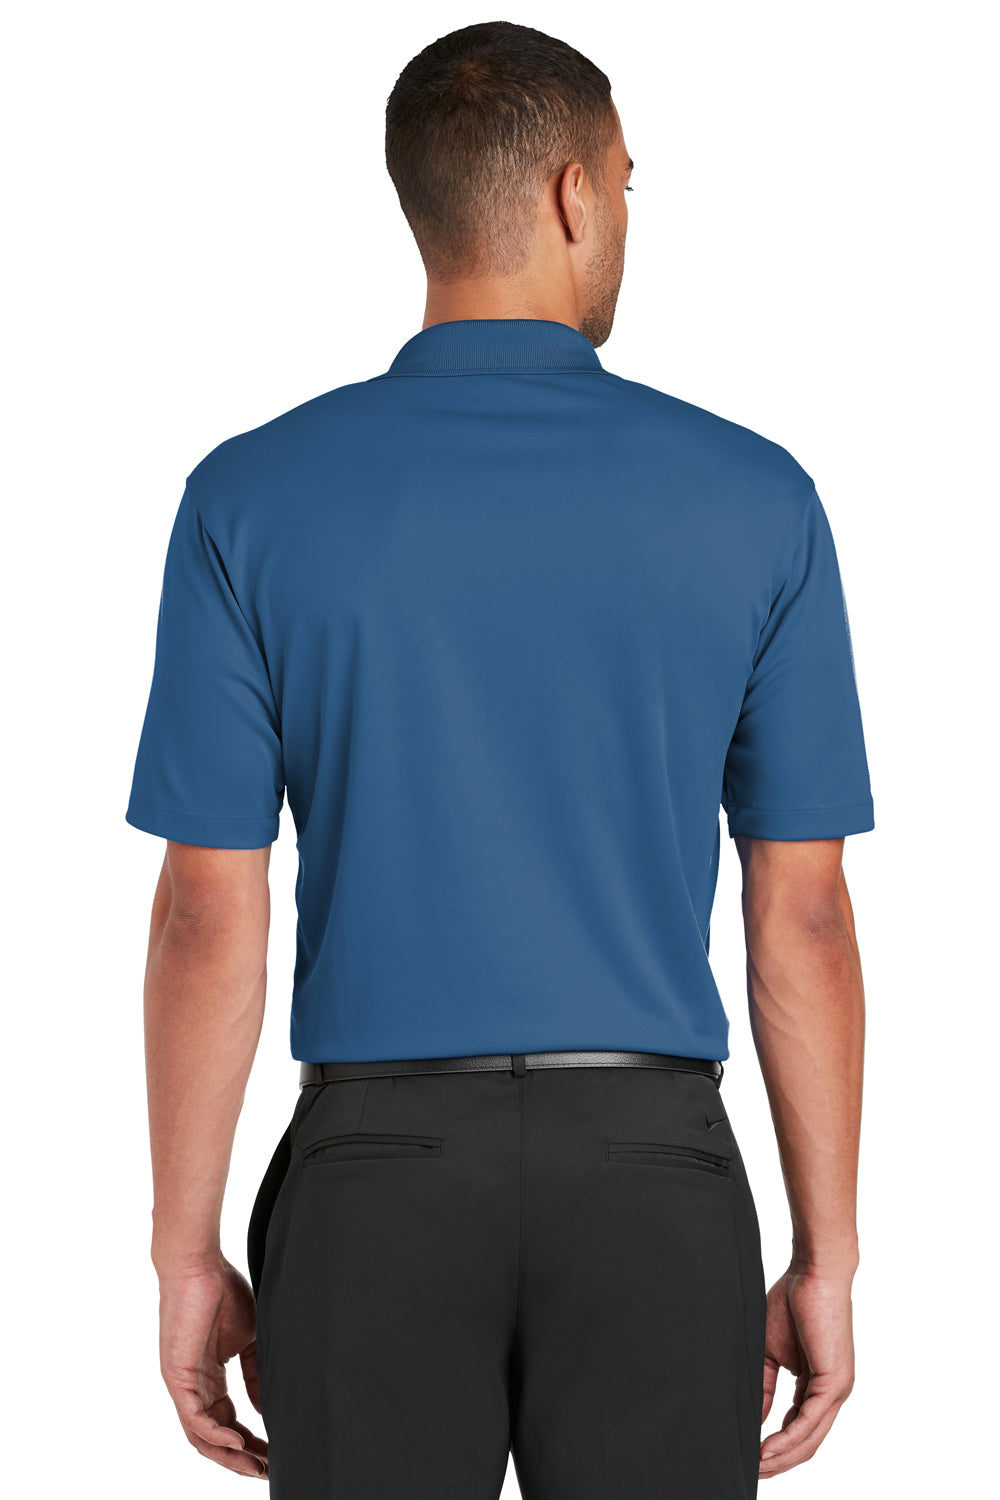 Nike 363807 Mens Dri-Fit Moisture Wicking Short Sleeve Polo Shirt Court Blue Back